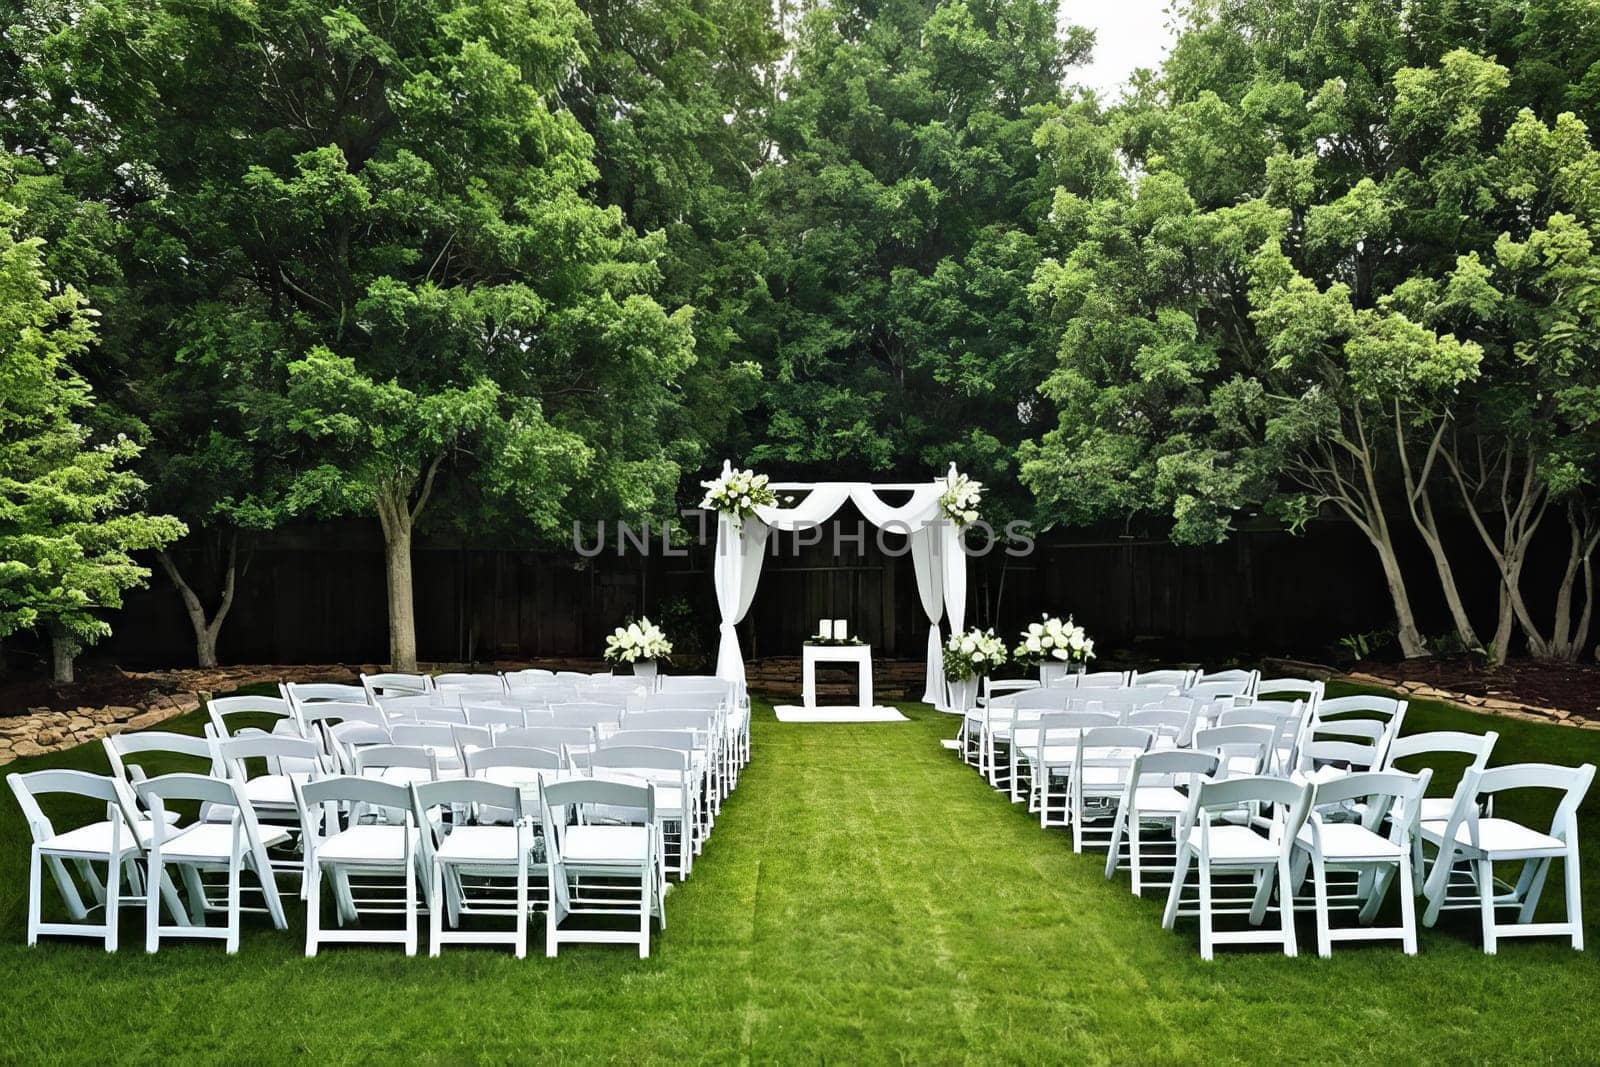 Romance and Simplicity: Wedding Celebration in an Elegant Backyard.